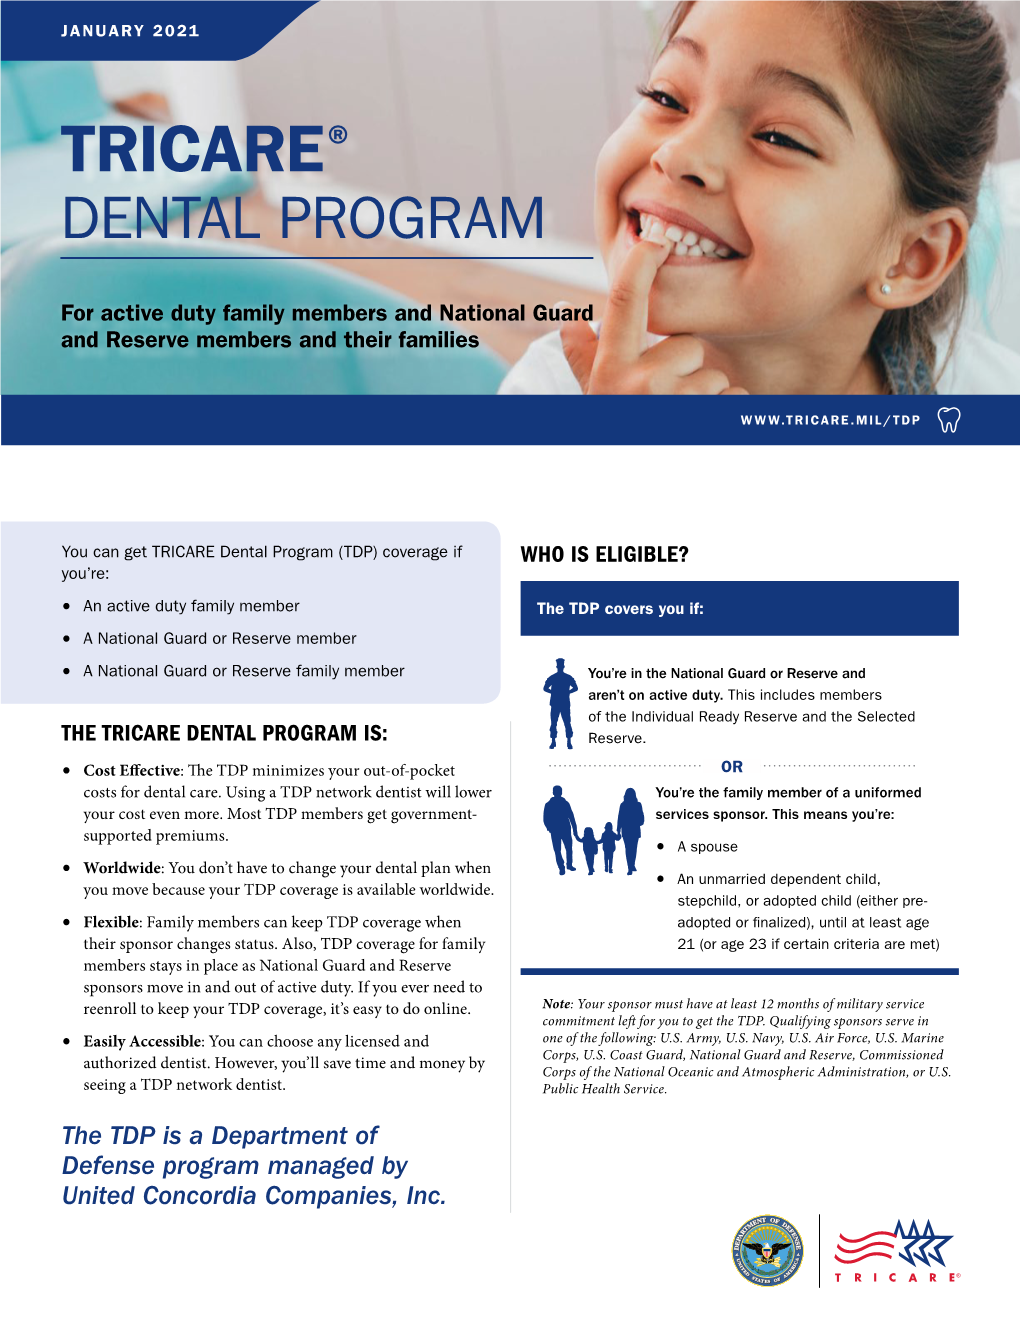 TRICARE Dental Program Brochure (January 2021)